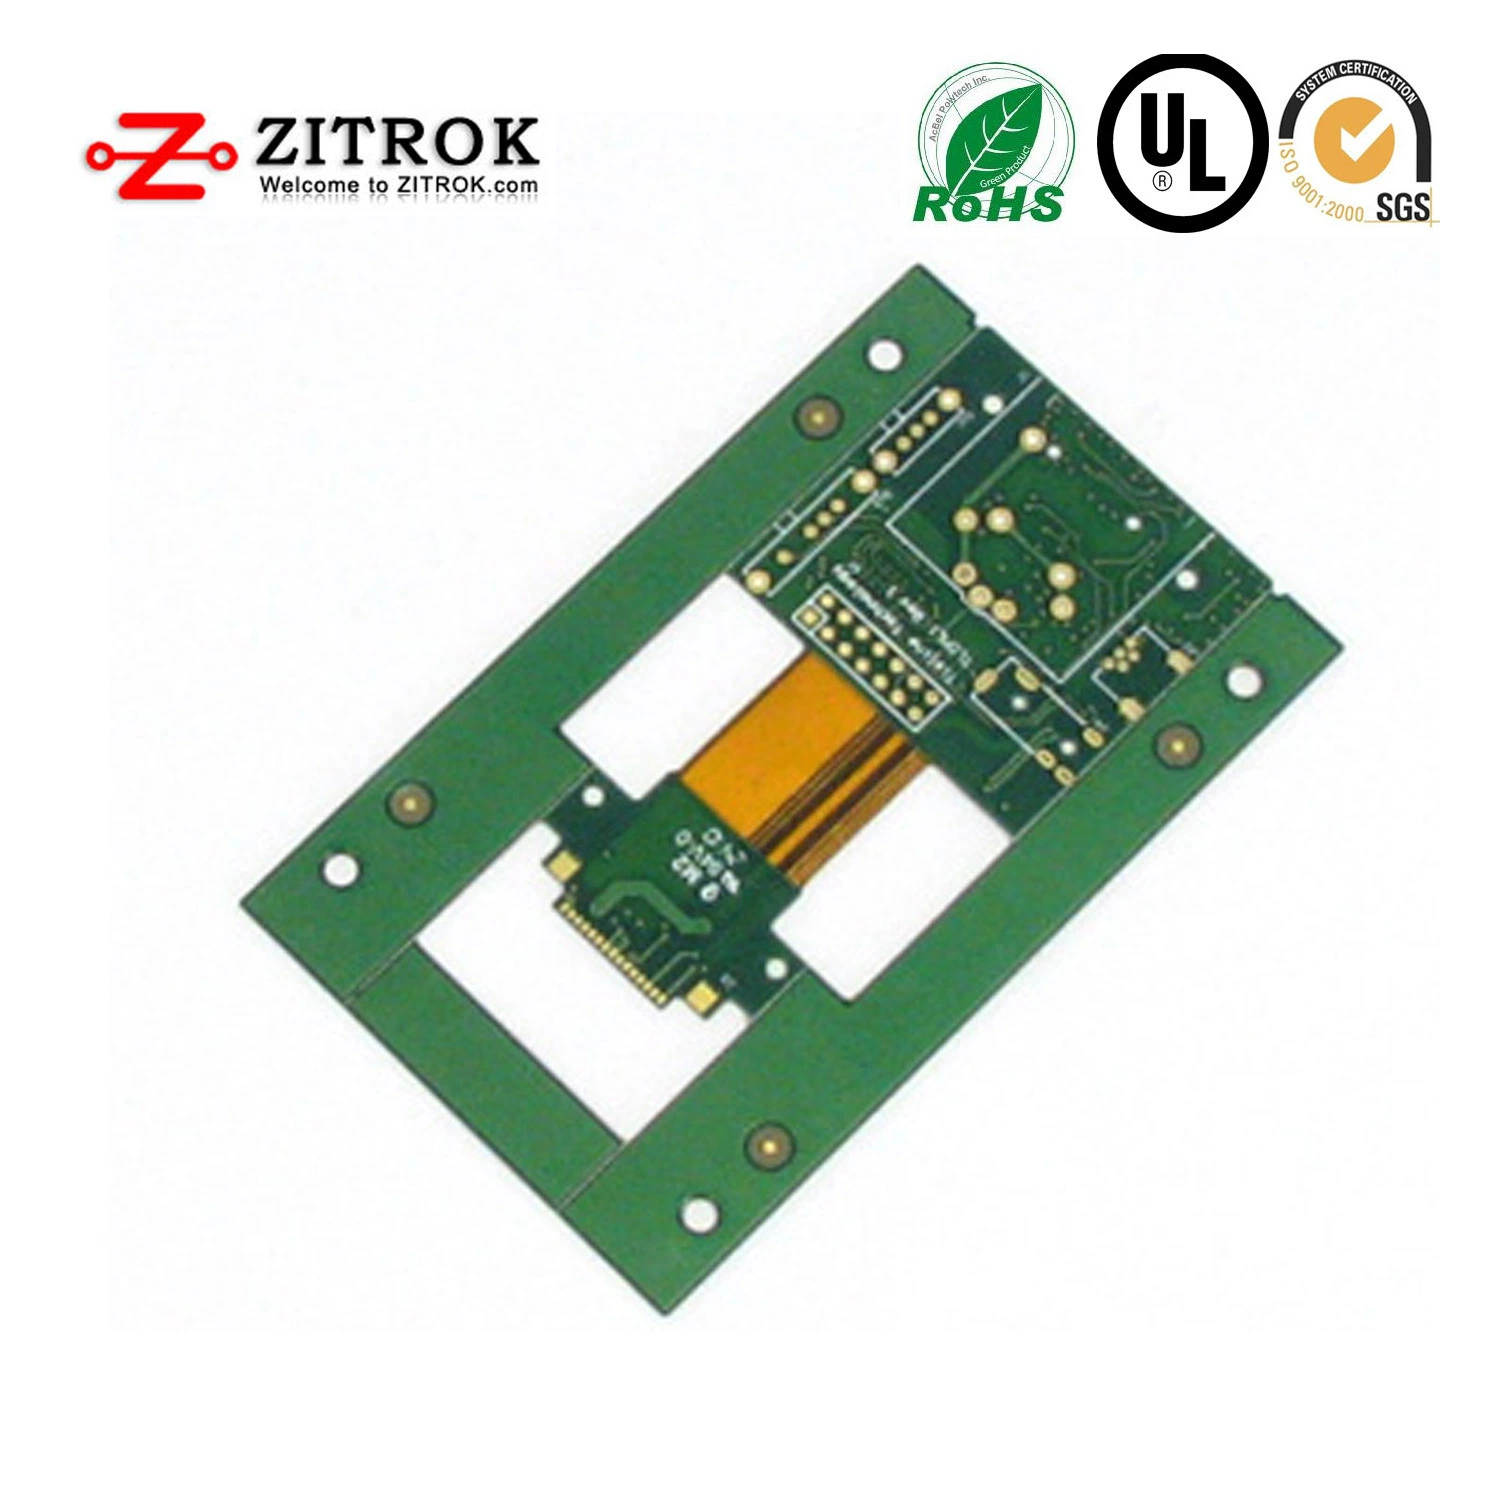 Rigid-Flex PCB&PCB Assembly Printed Circuit Board, Electronics PCB Manufacturing